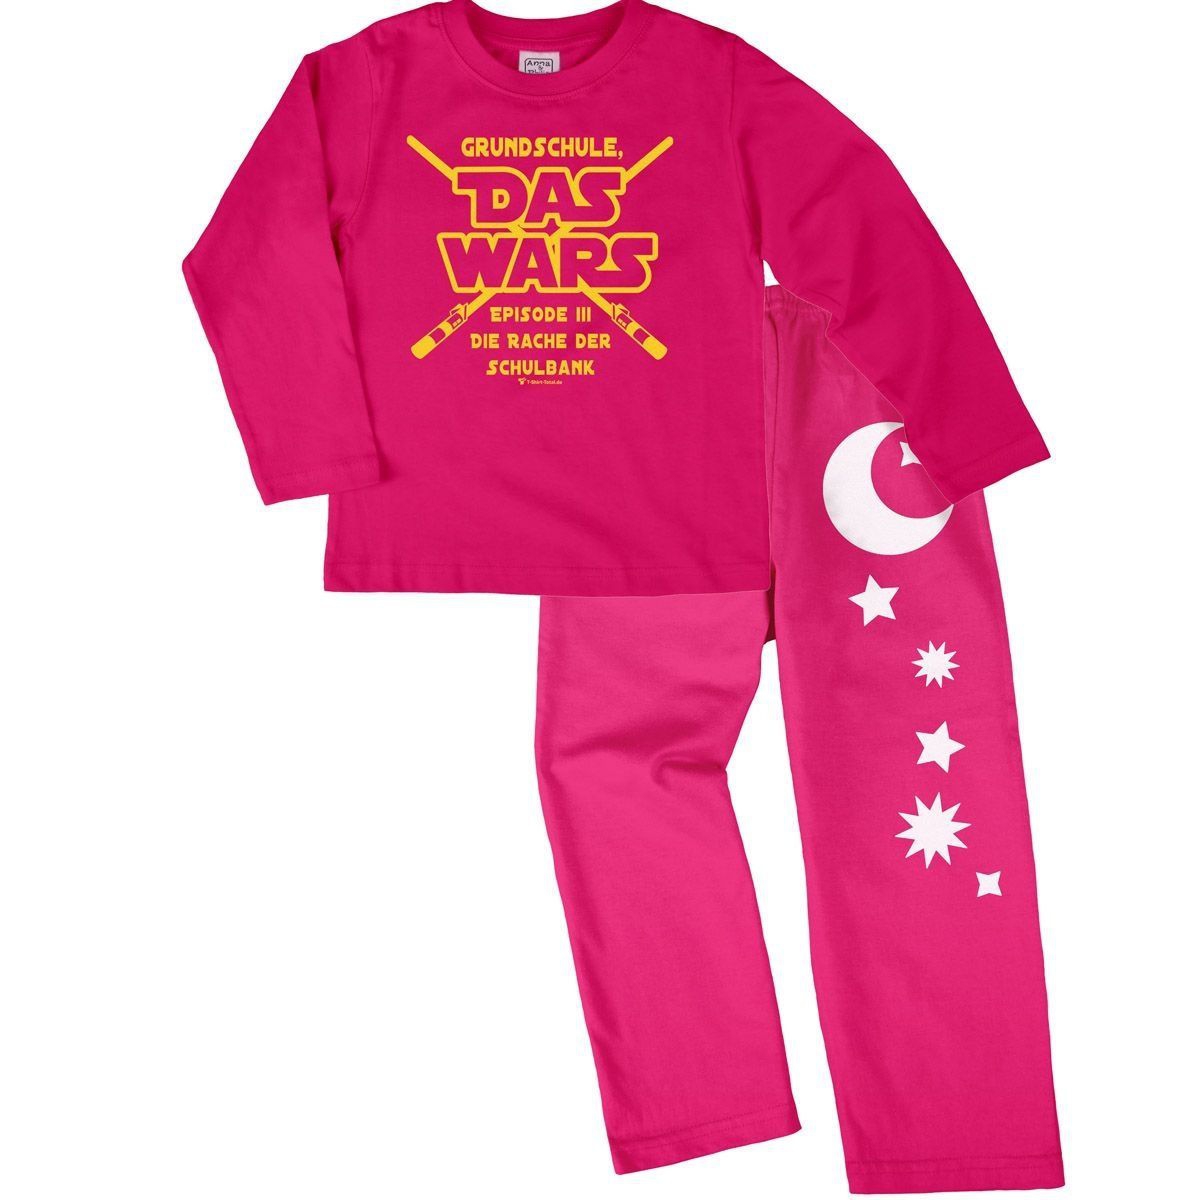 Das wars Grundschule Pyjama Set pink / pink 134 / 140